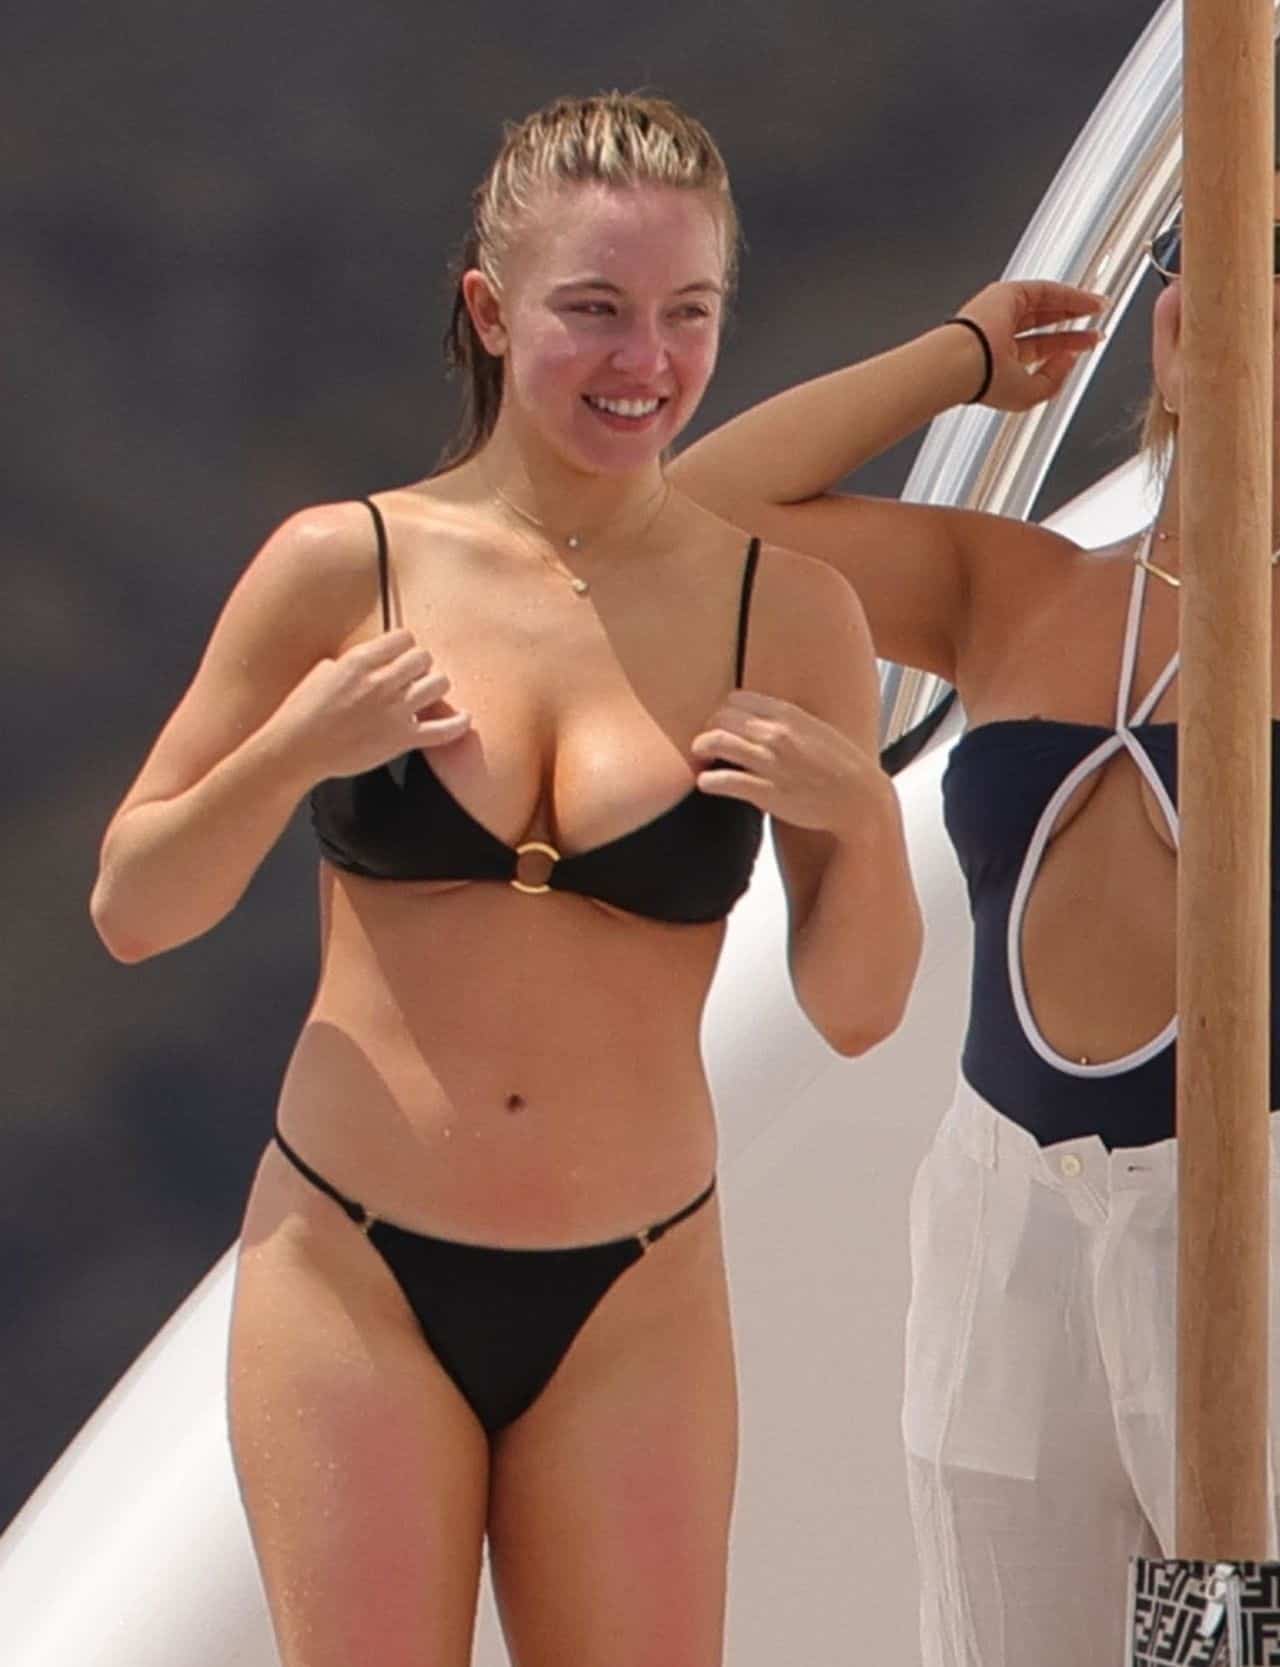 Sydney Sweeney Soaks Up the Summer in Ibiza and Models Chic Black Bikini